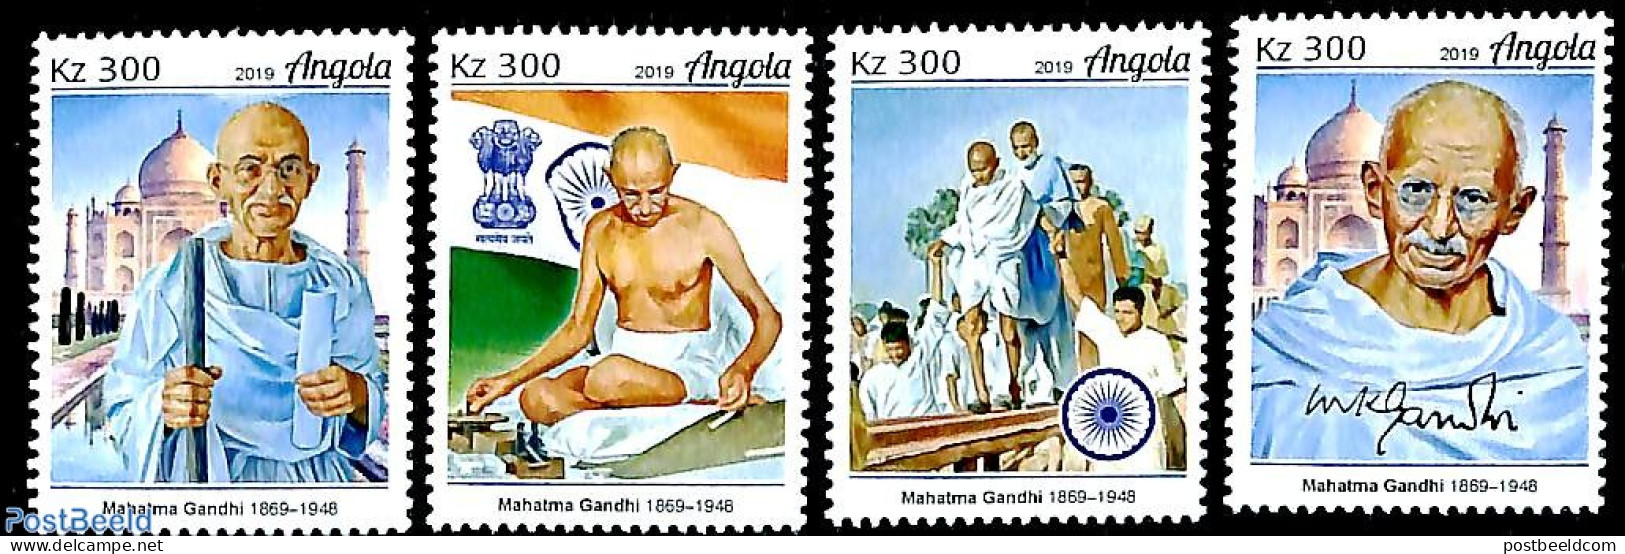 Angola 2019 M. Gandhi 4v, Mint NH, History - Gandhi - Mahatma Gandhi